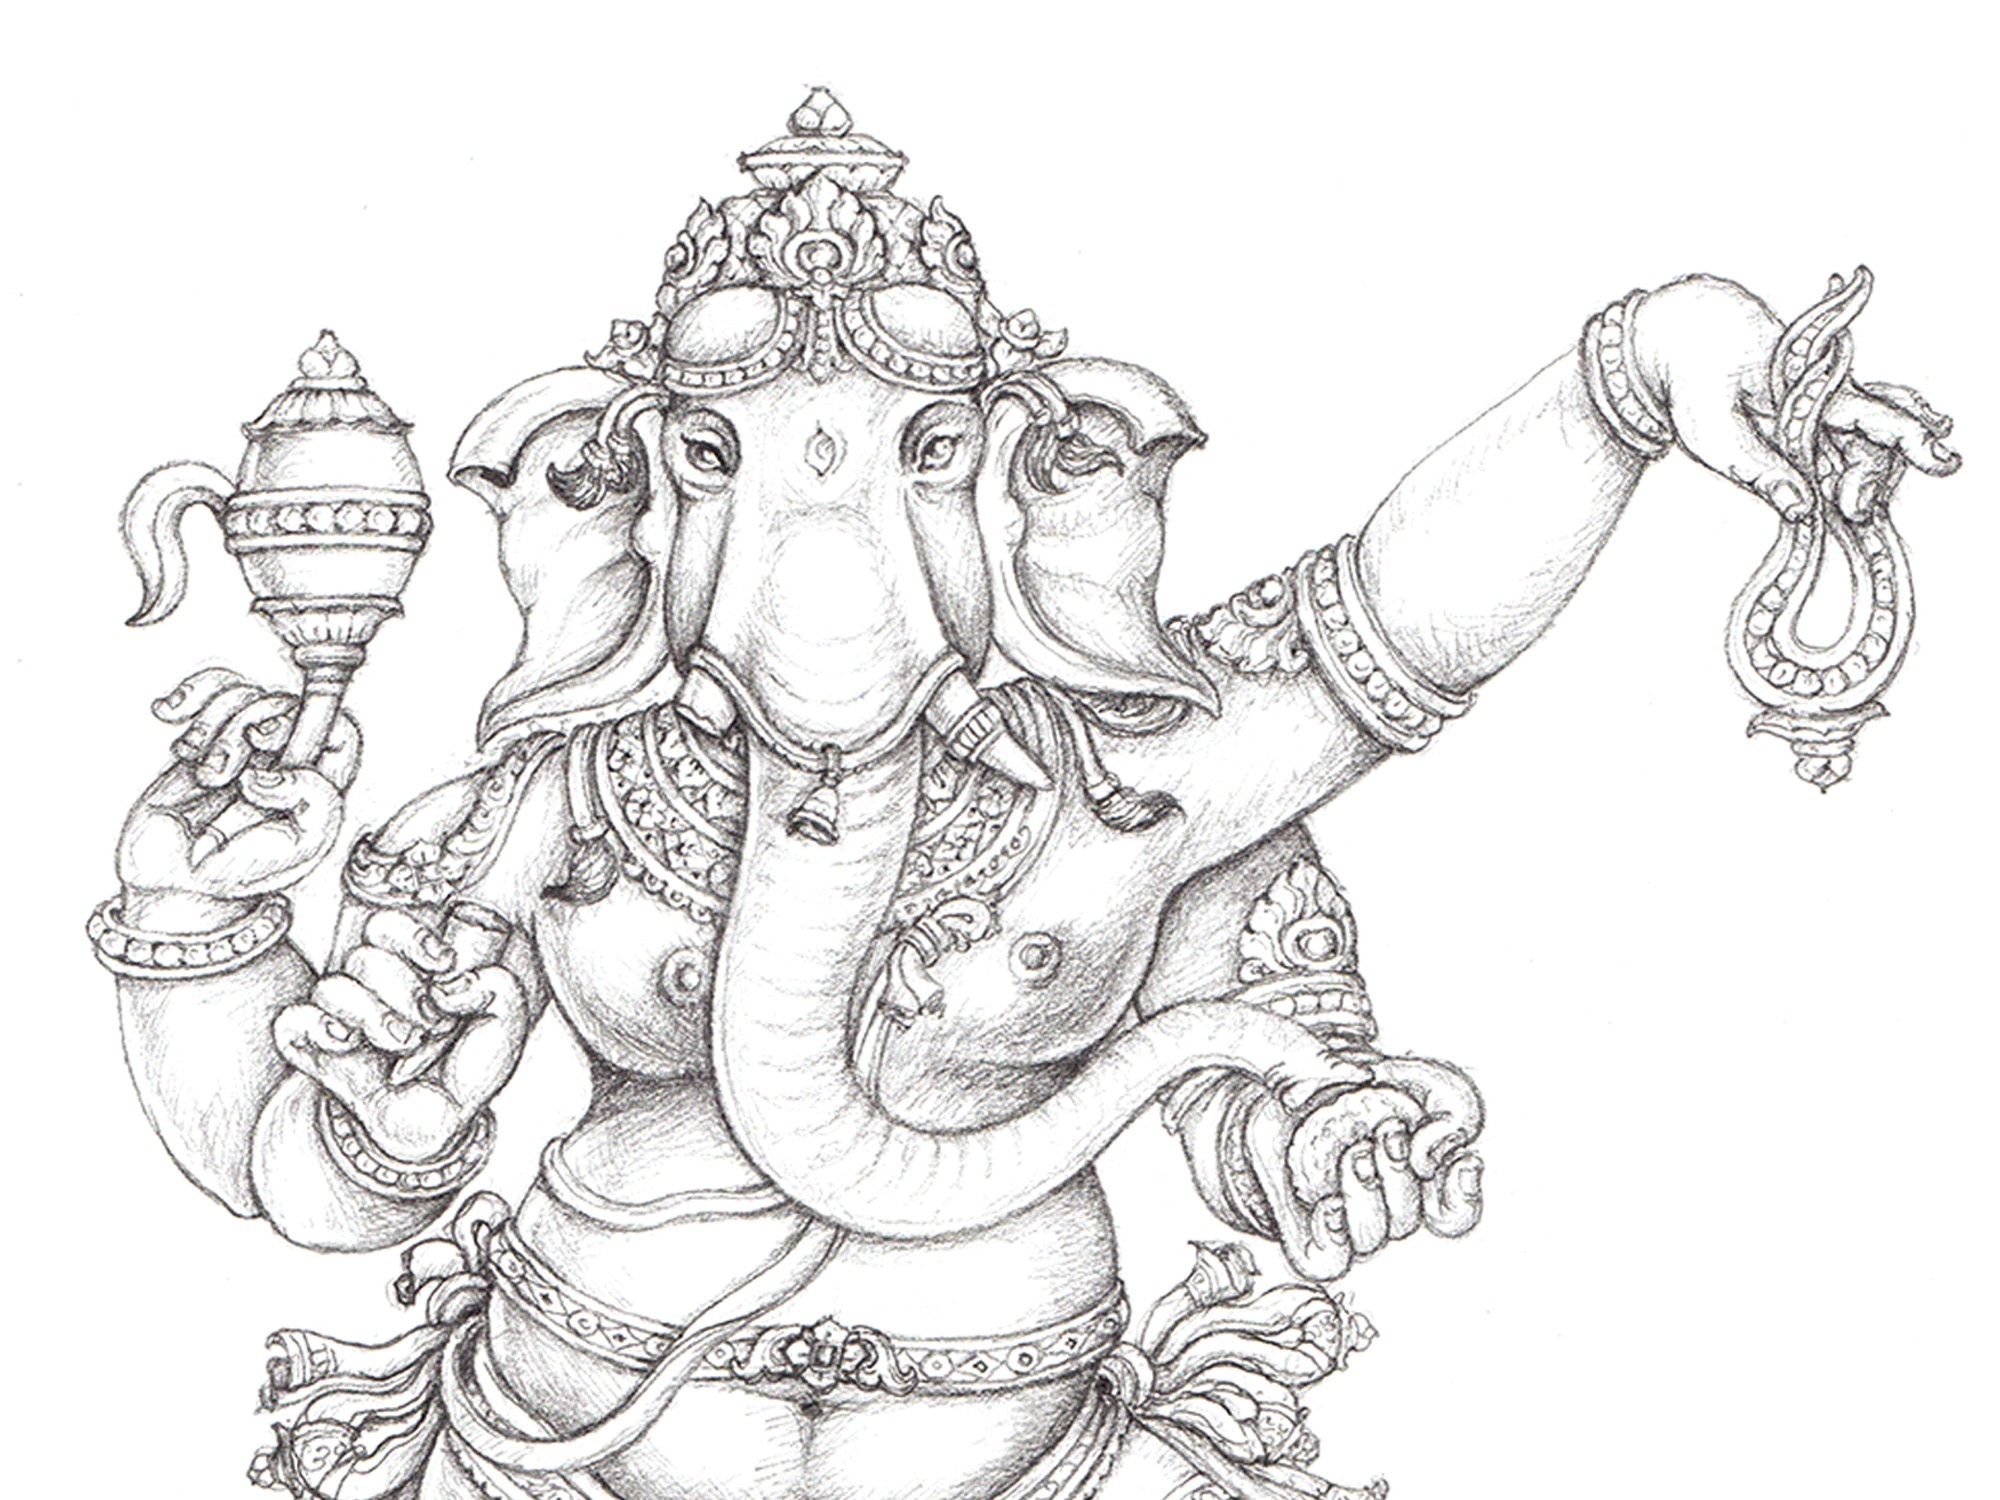 Shree Ganesha Painting by Amit Banerjee